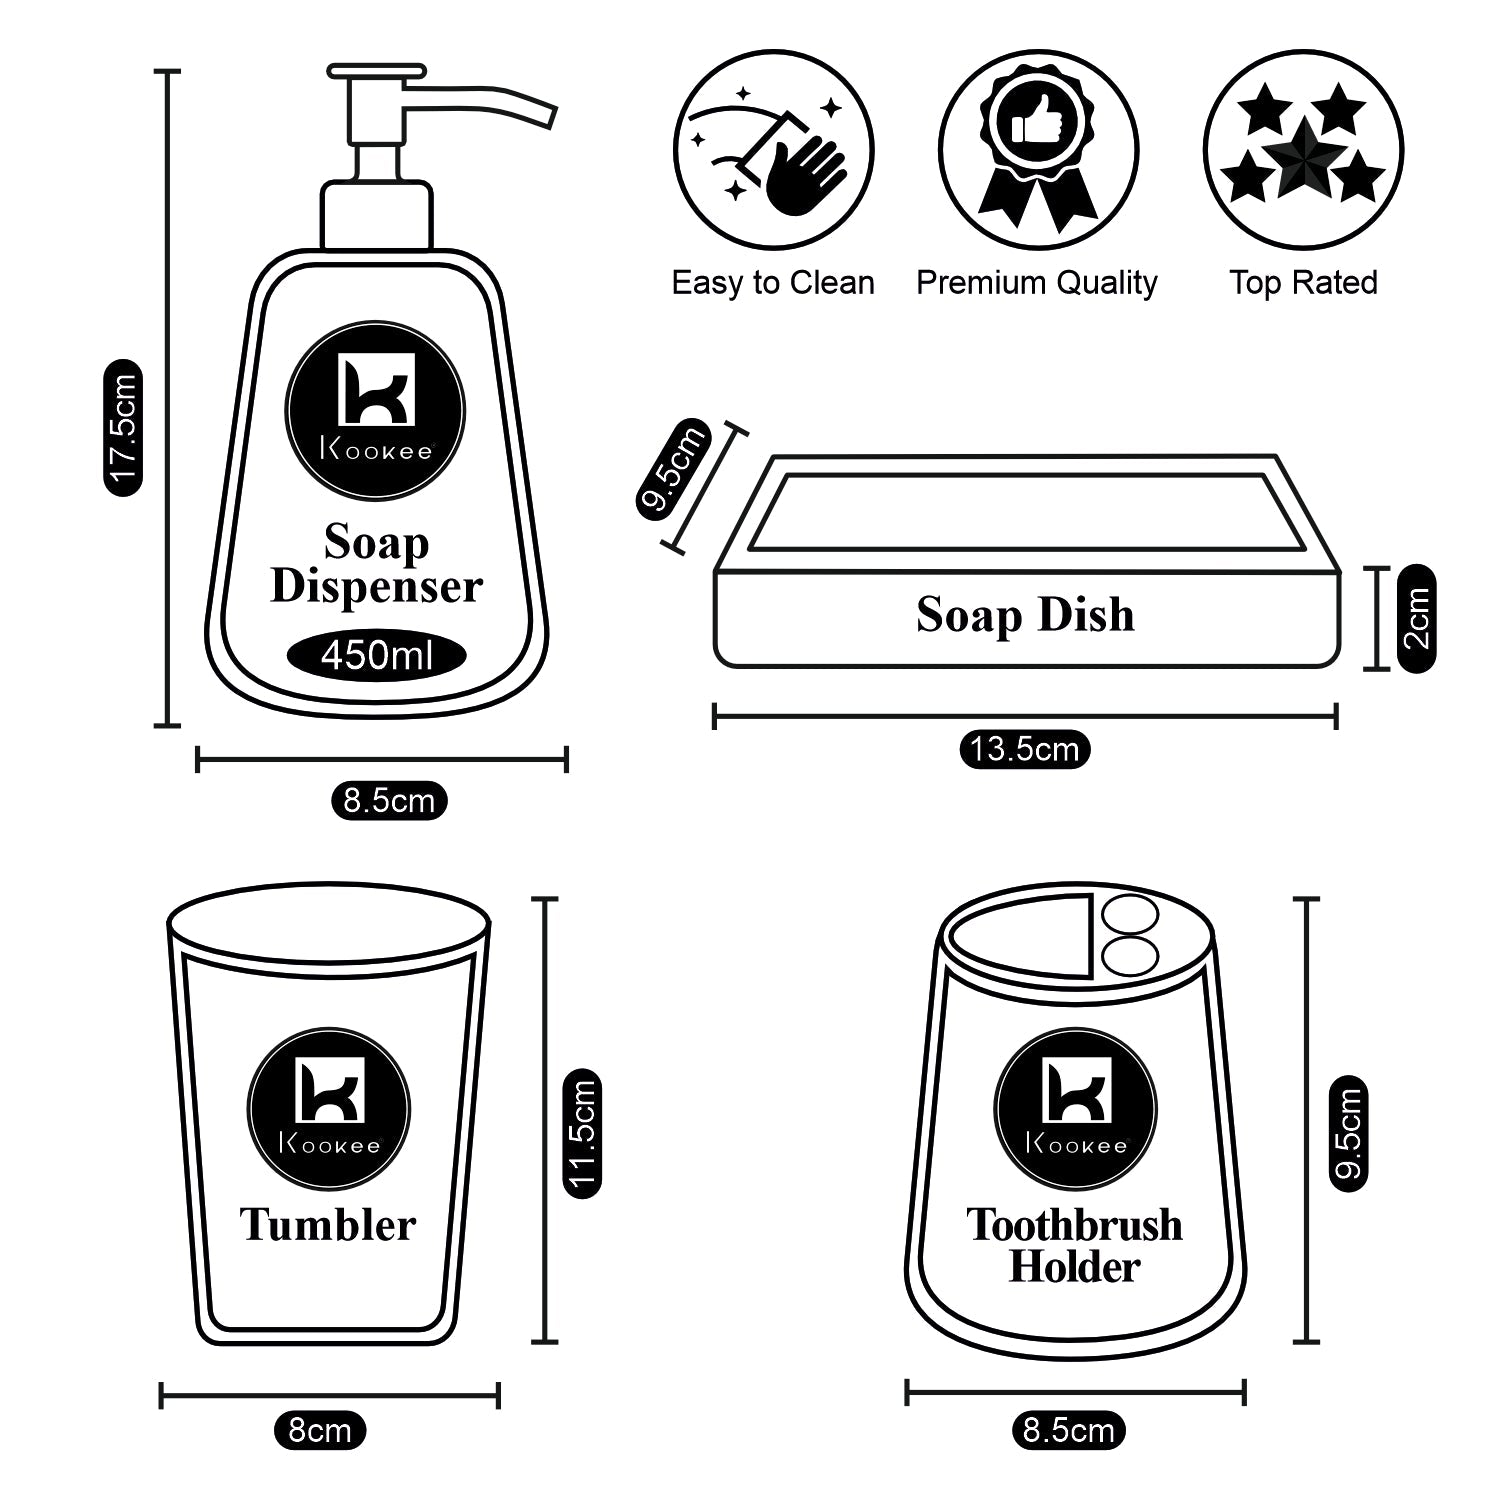 Ceramic Bathroom Accessories Set of 4 Bath Set with Soap Dispenser (8157)